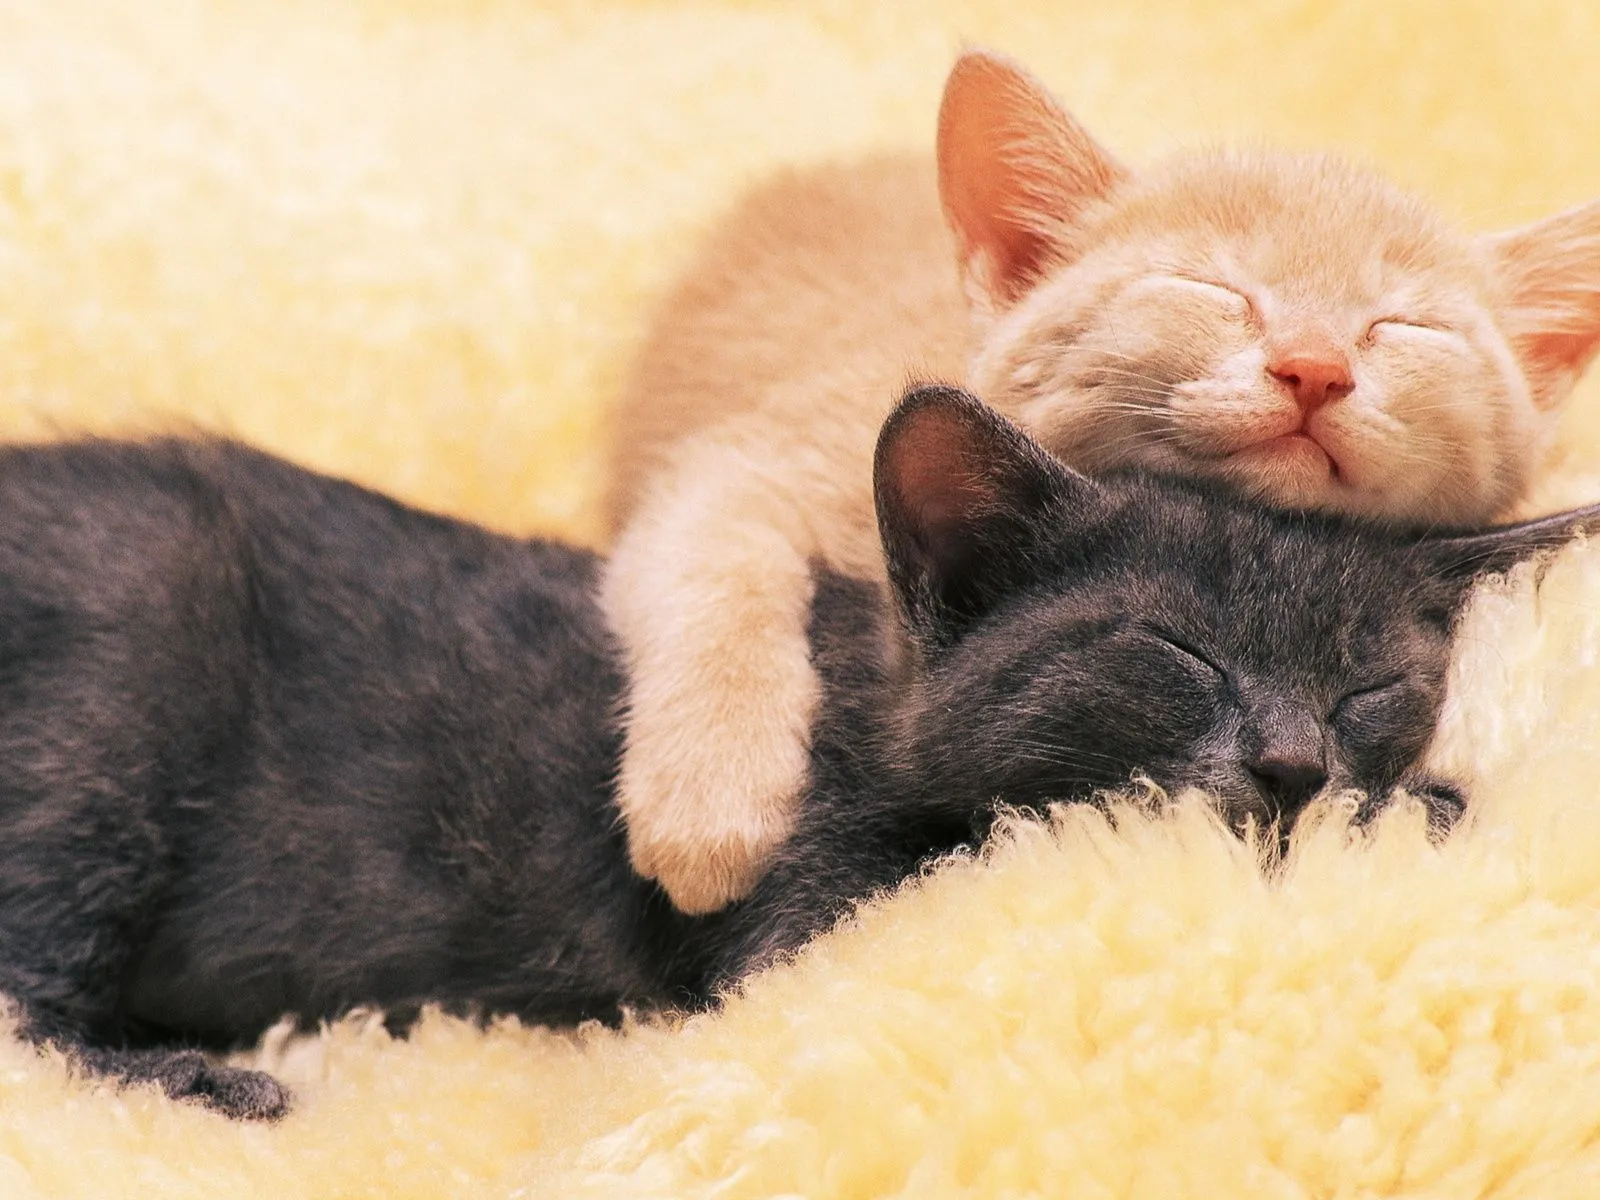 fotos de dos gatos abrazados para facebook ~ Mejores Fotos del ...